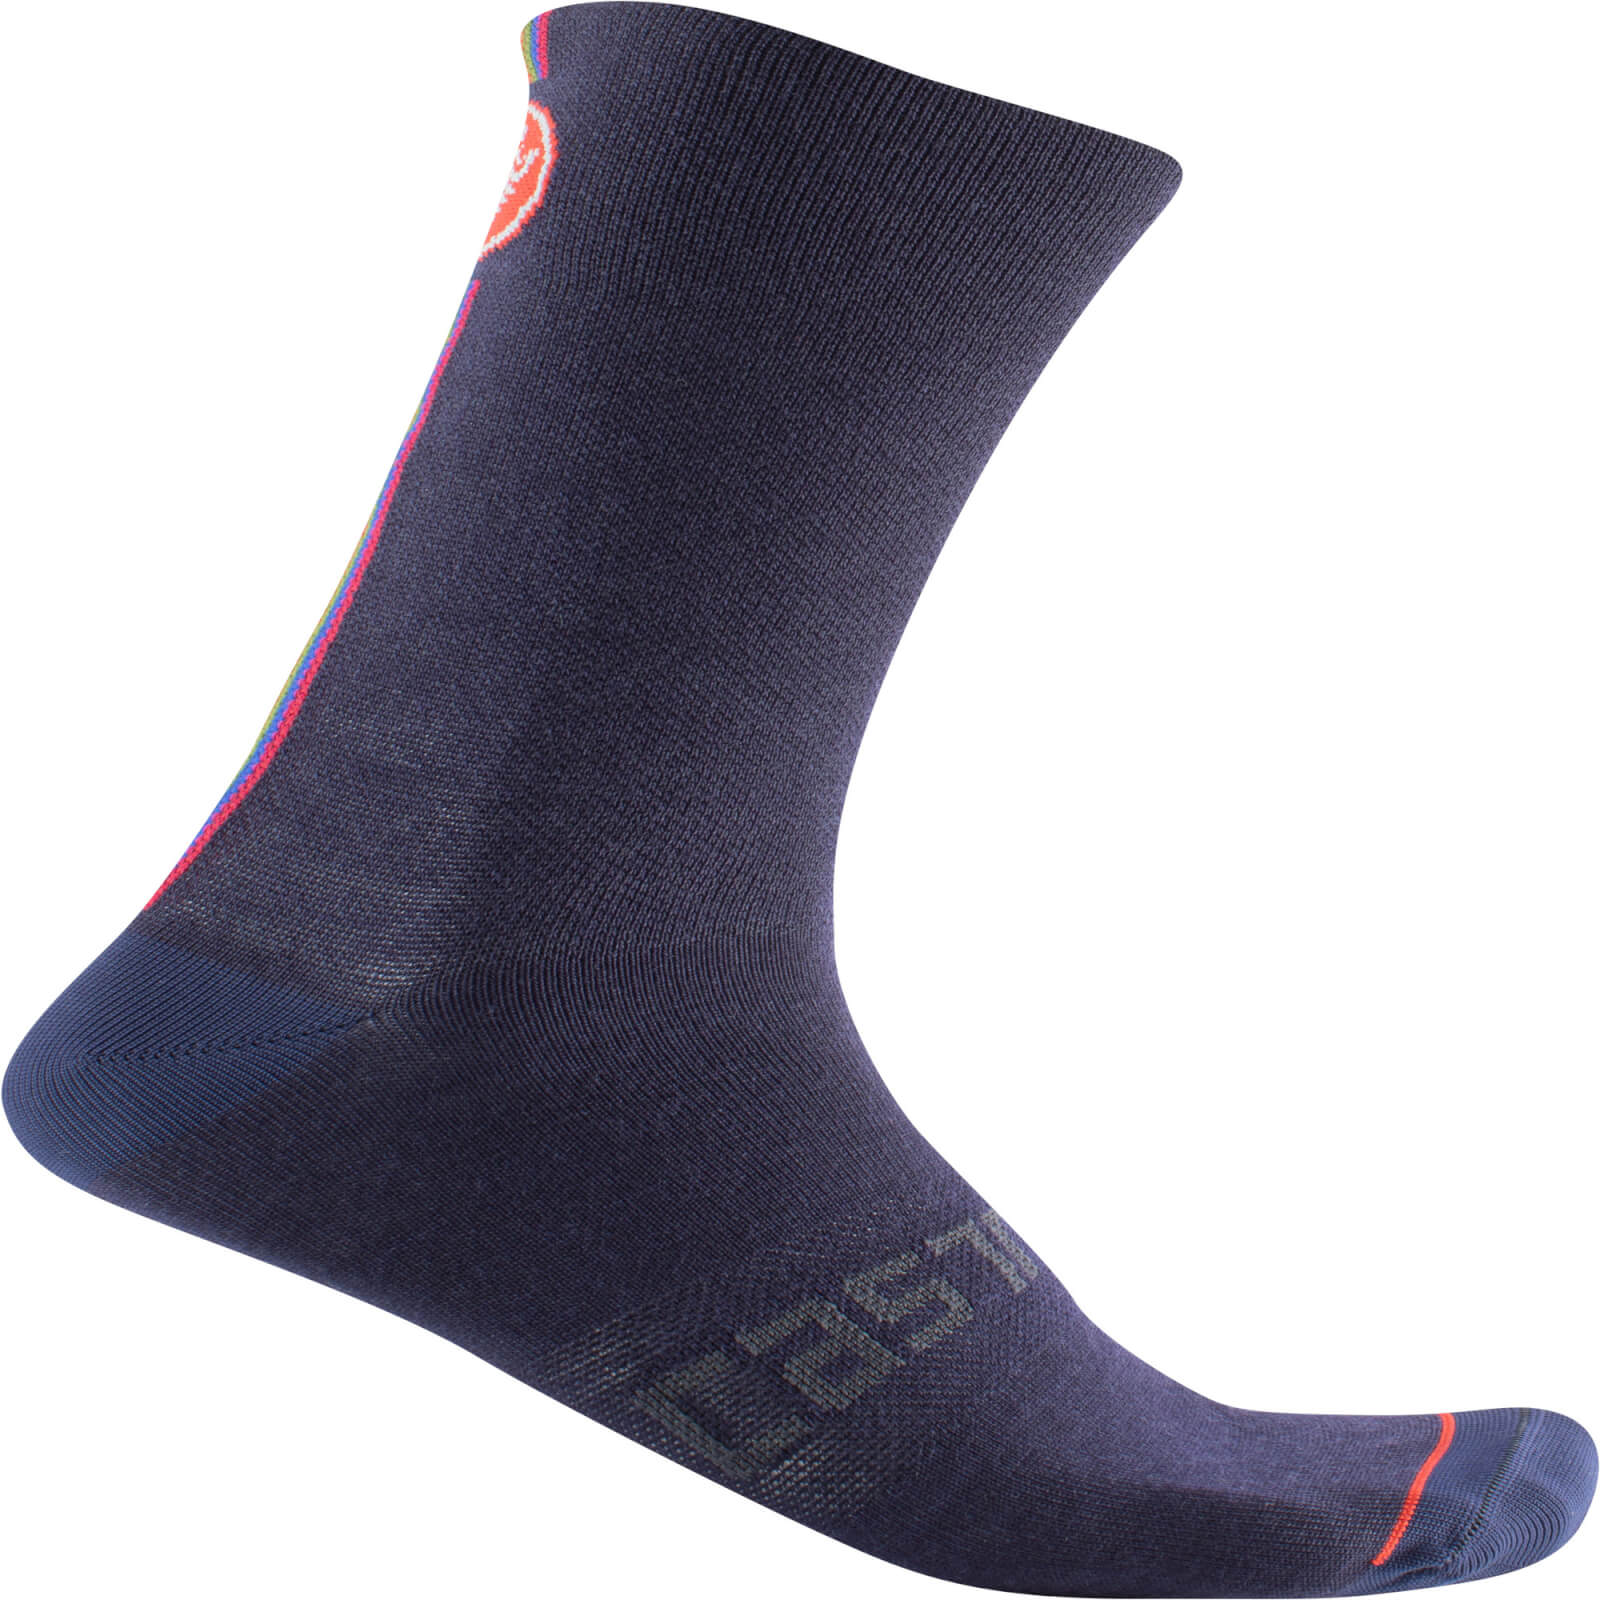 Castelli Racing Stripe 18 Socks - S/M - Savile Blue